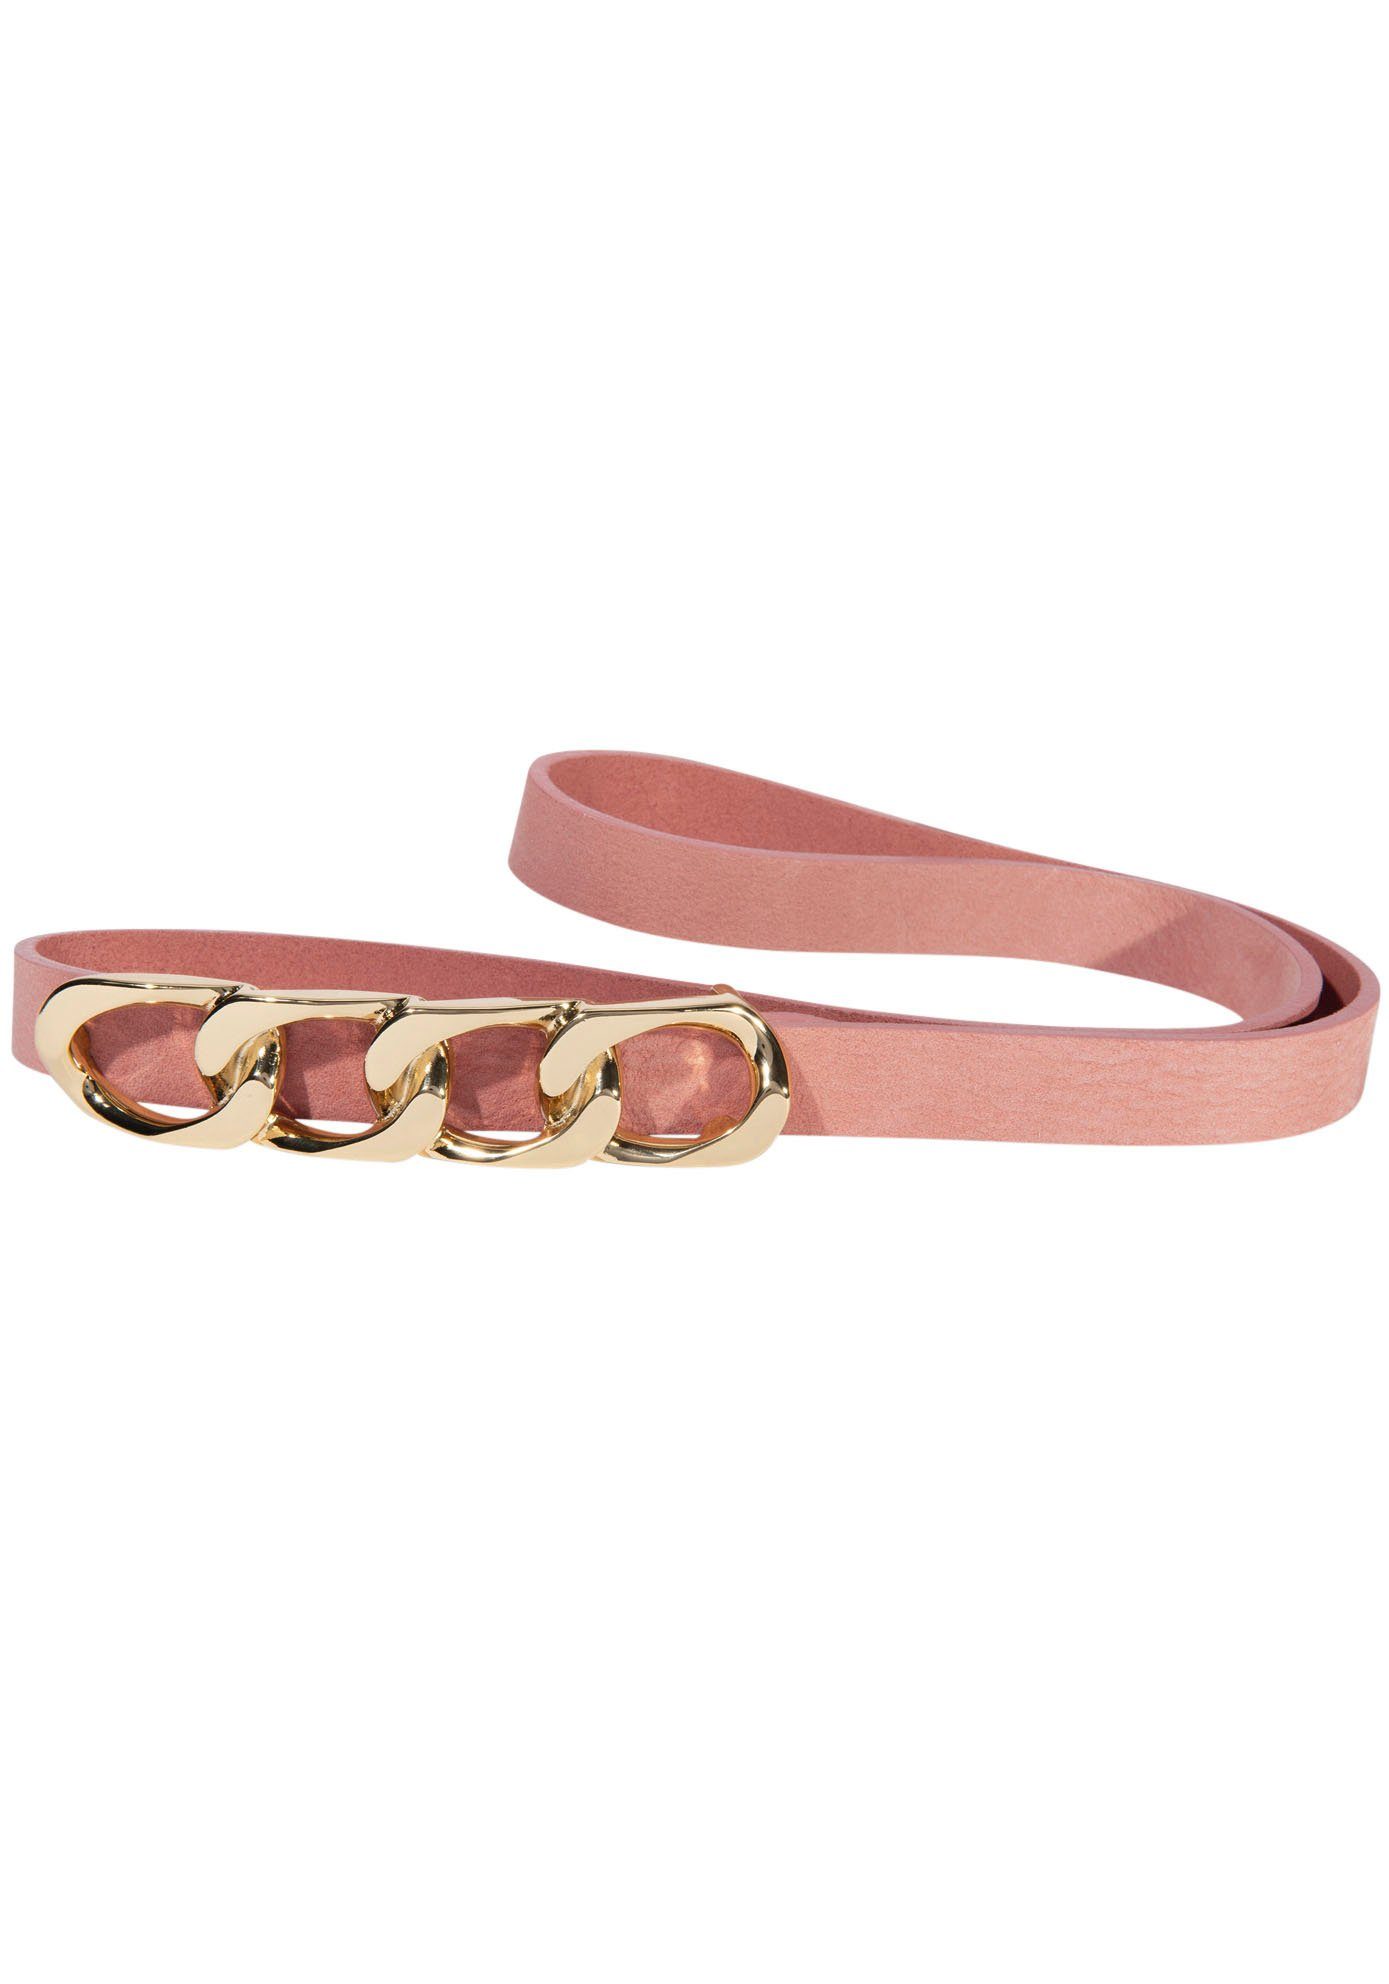 0 rosé Ledergürtel im Silbergift Kettenlook Design-Goldschließe